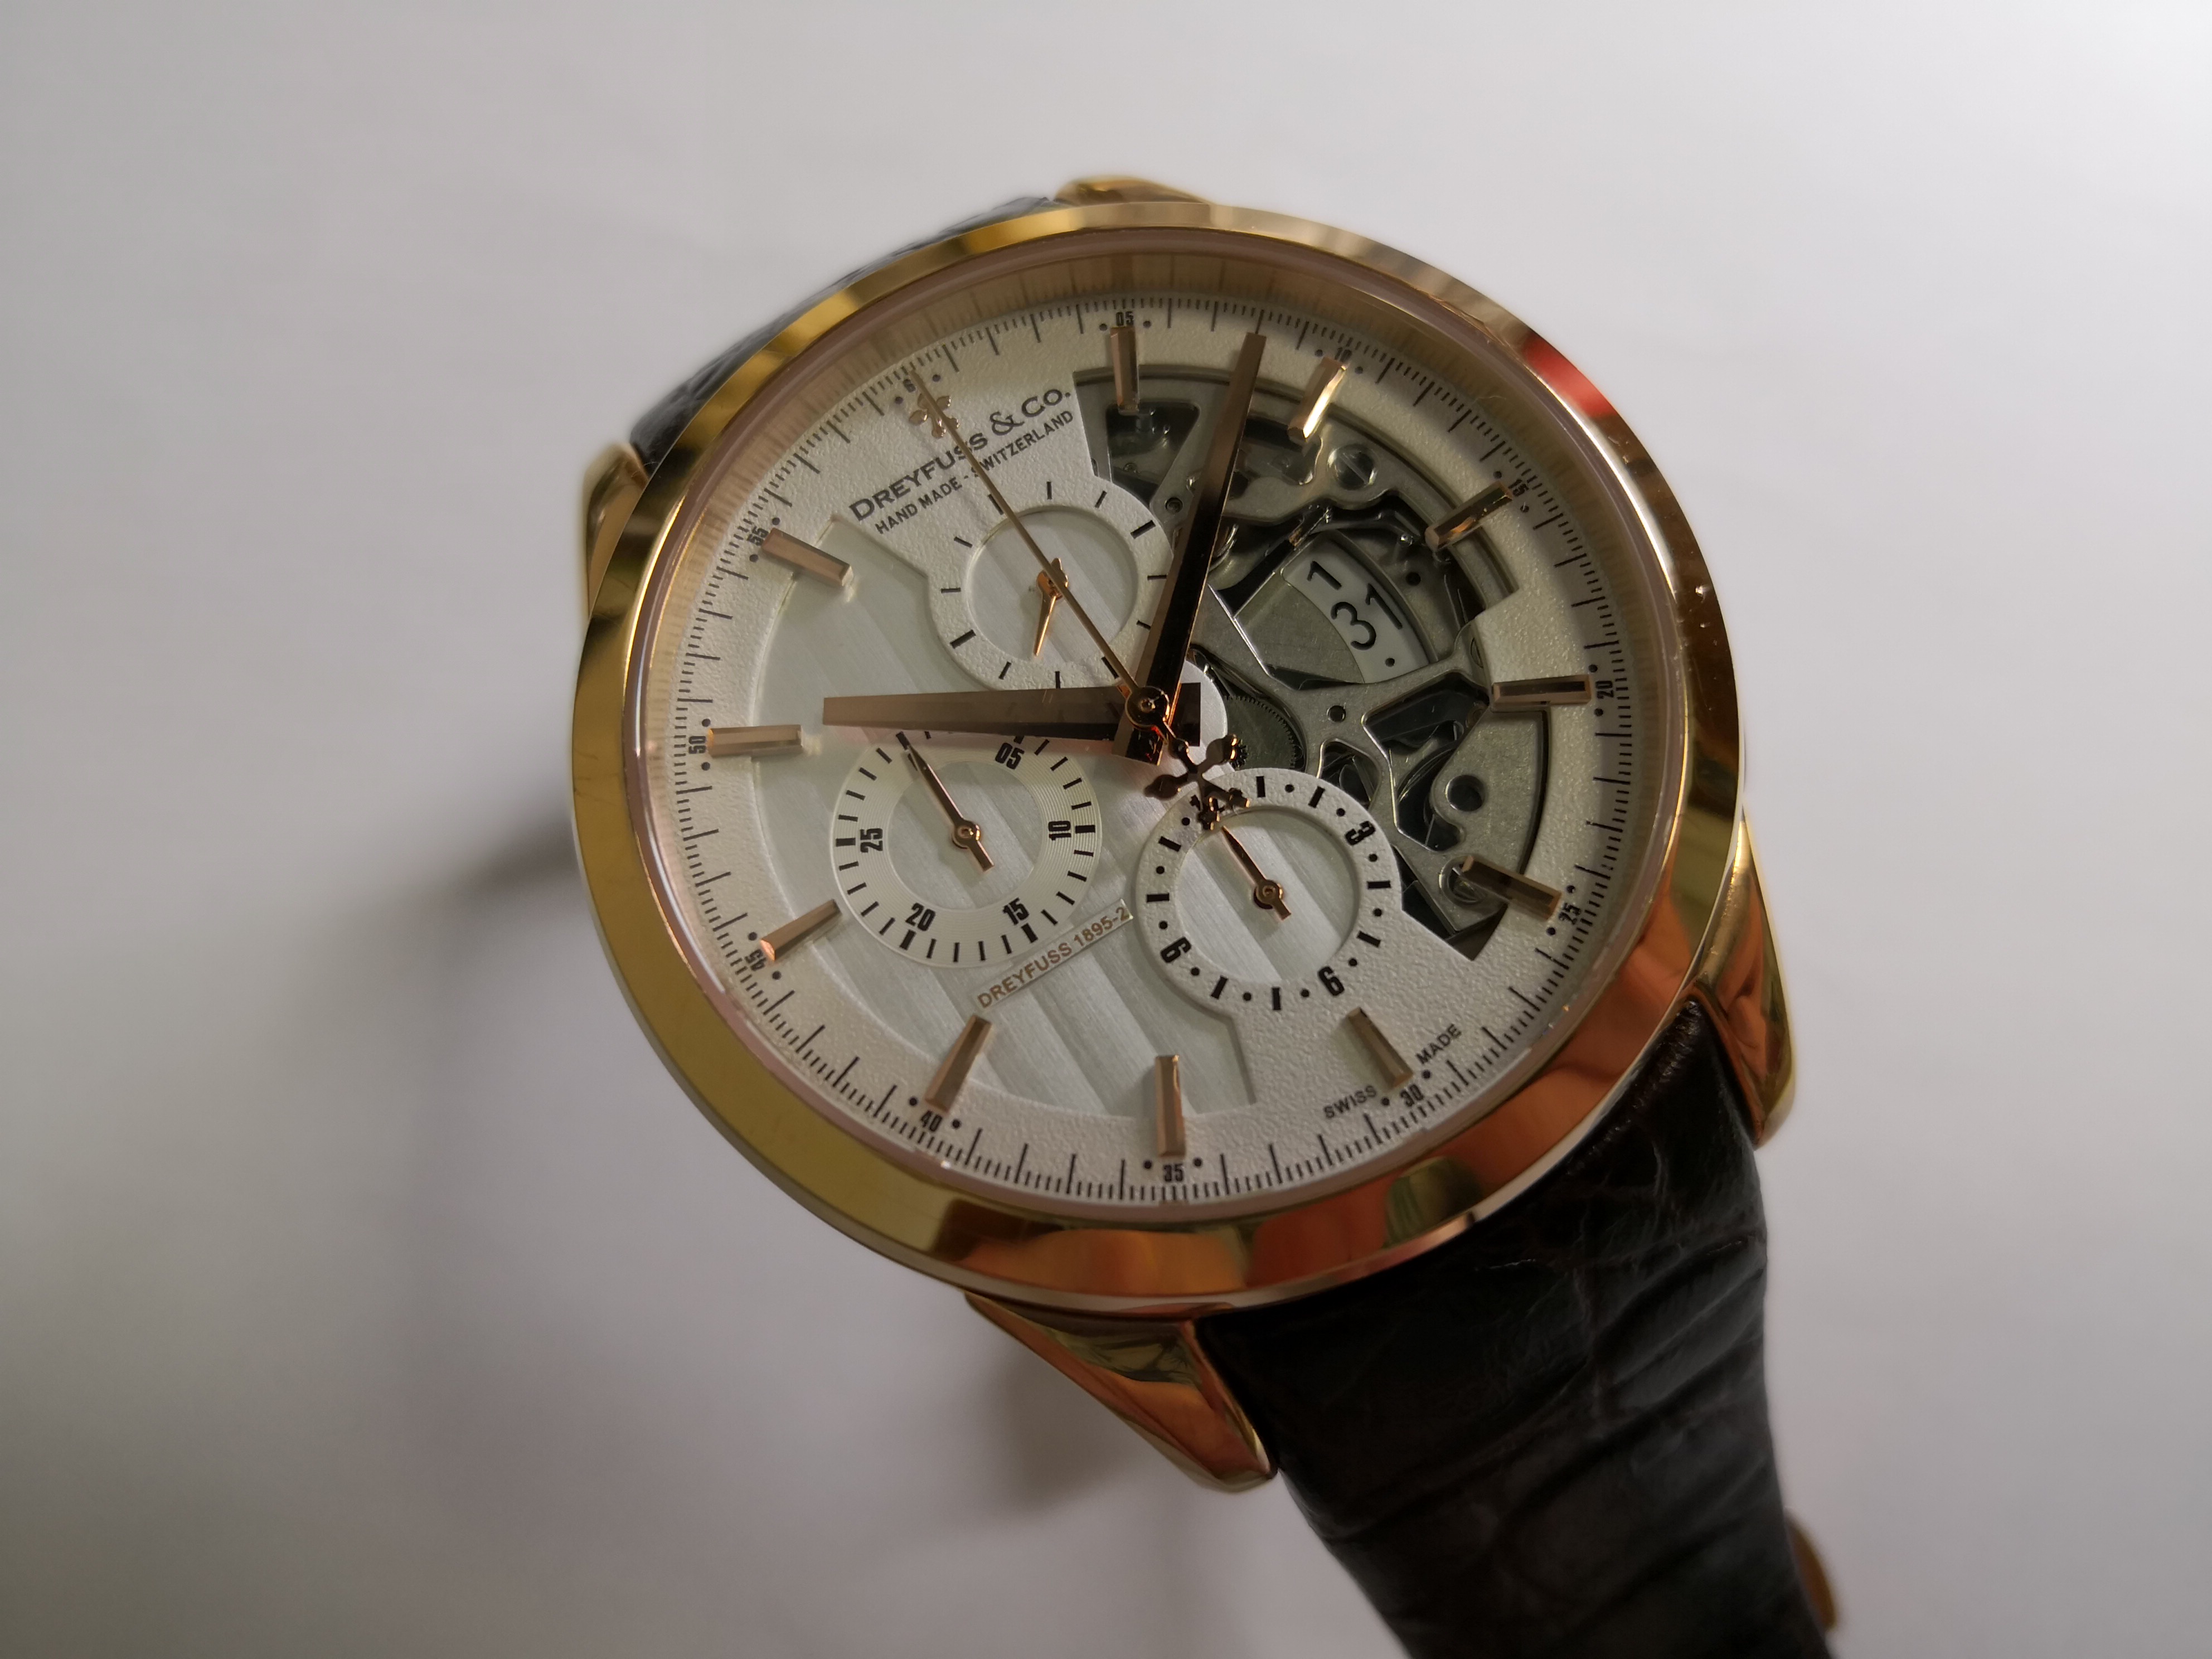 DREYFUSS & CO Swiss Mens 1890 Gold & Silver Bracelet Watch DGB00126/03 RRP  £525 £139.99 - PicClick UK